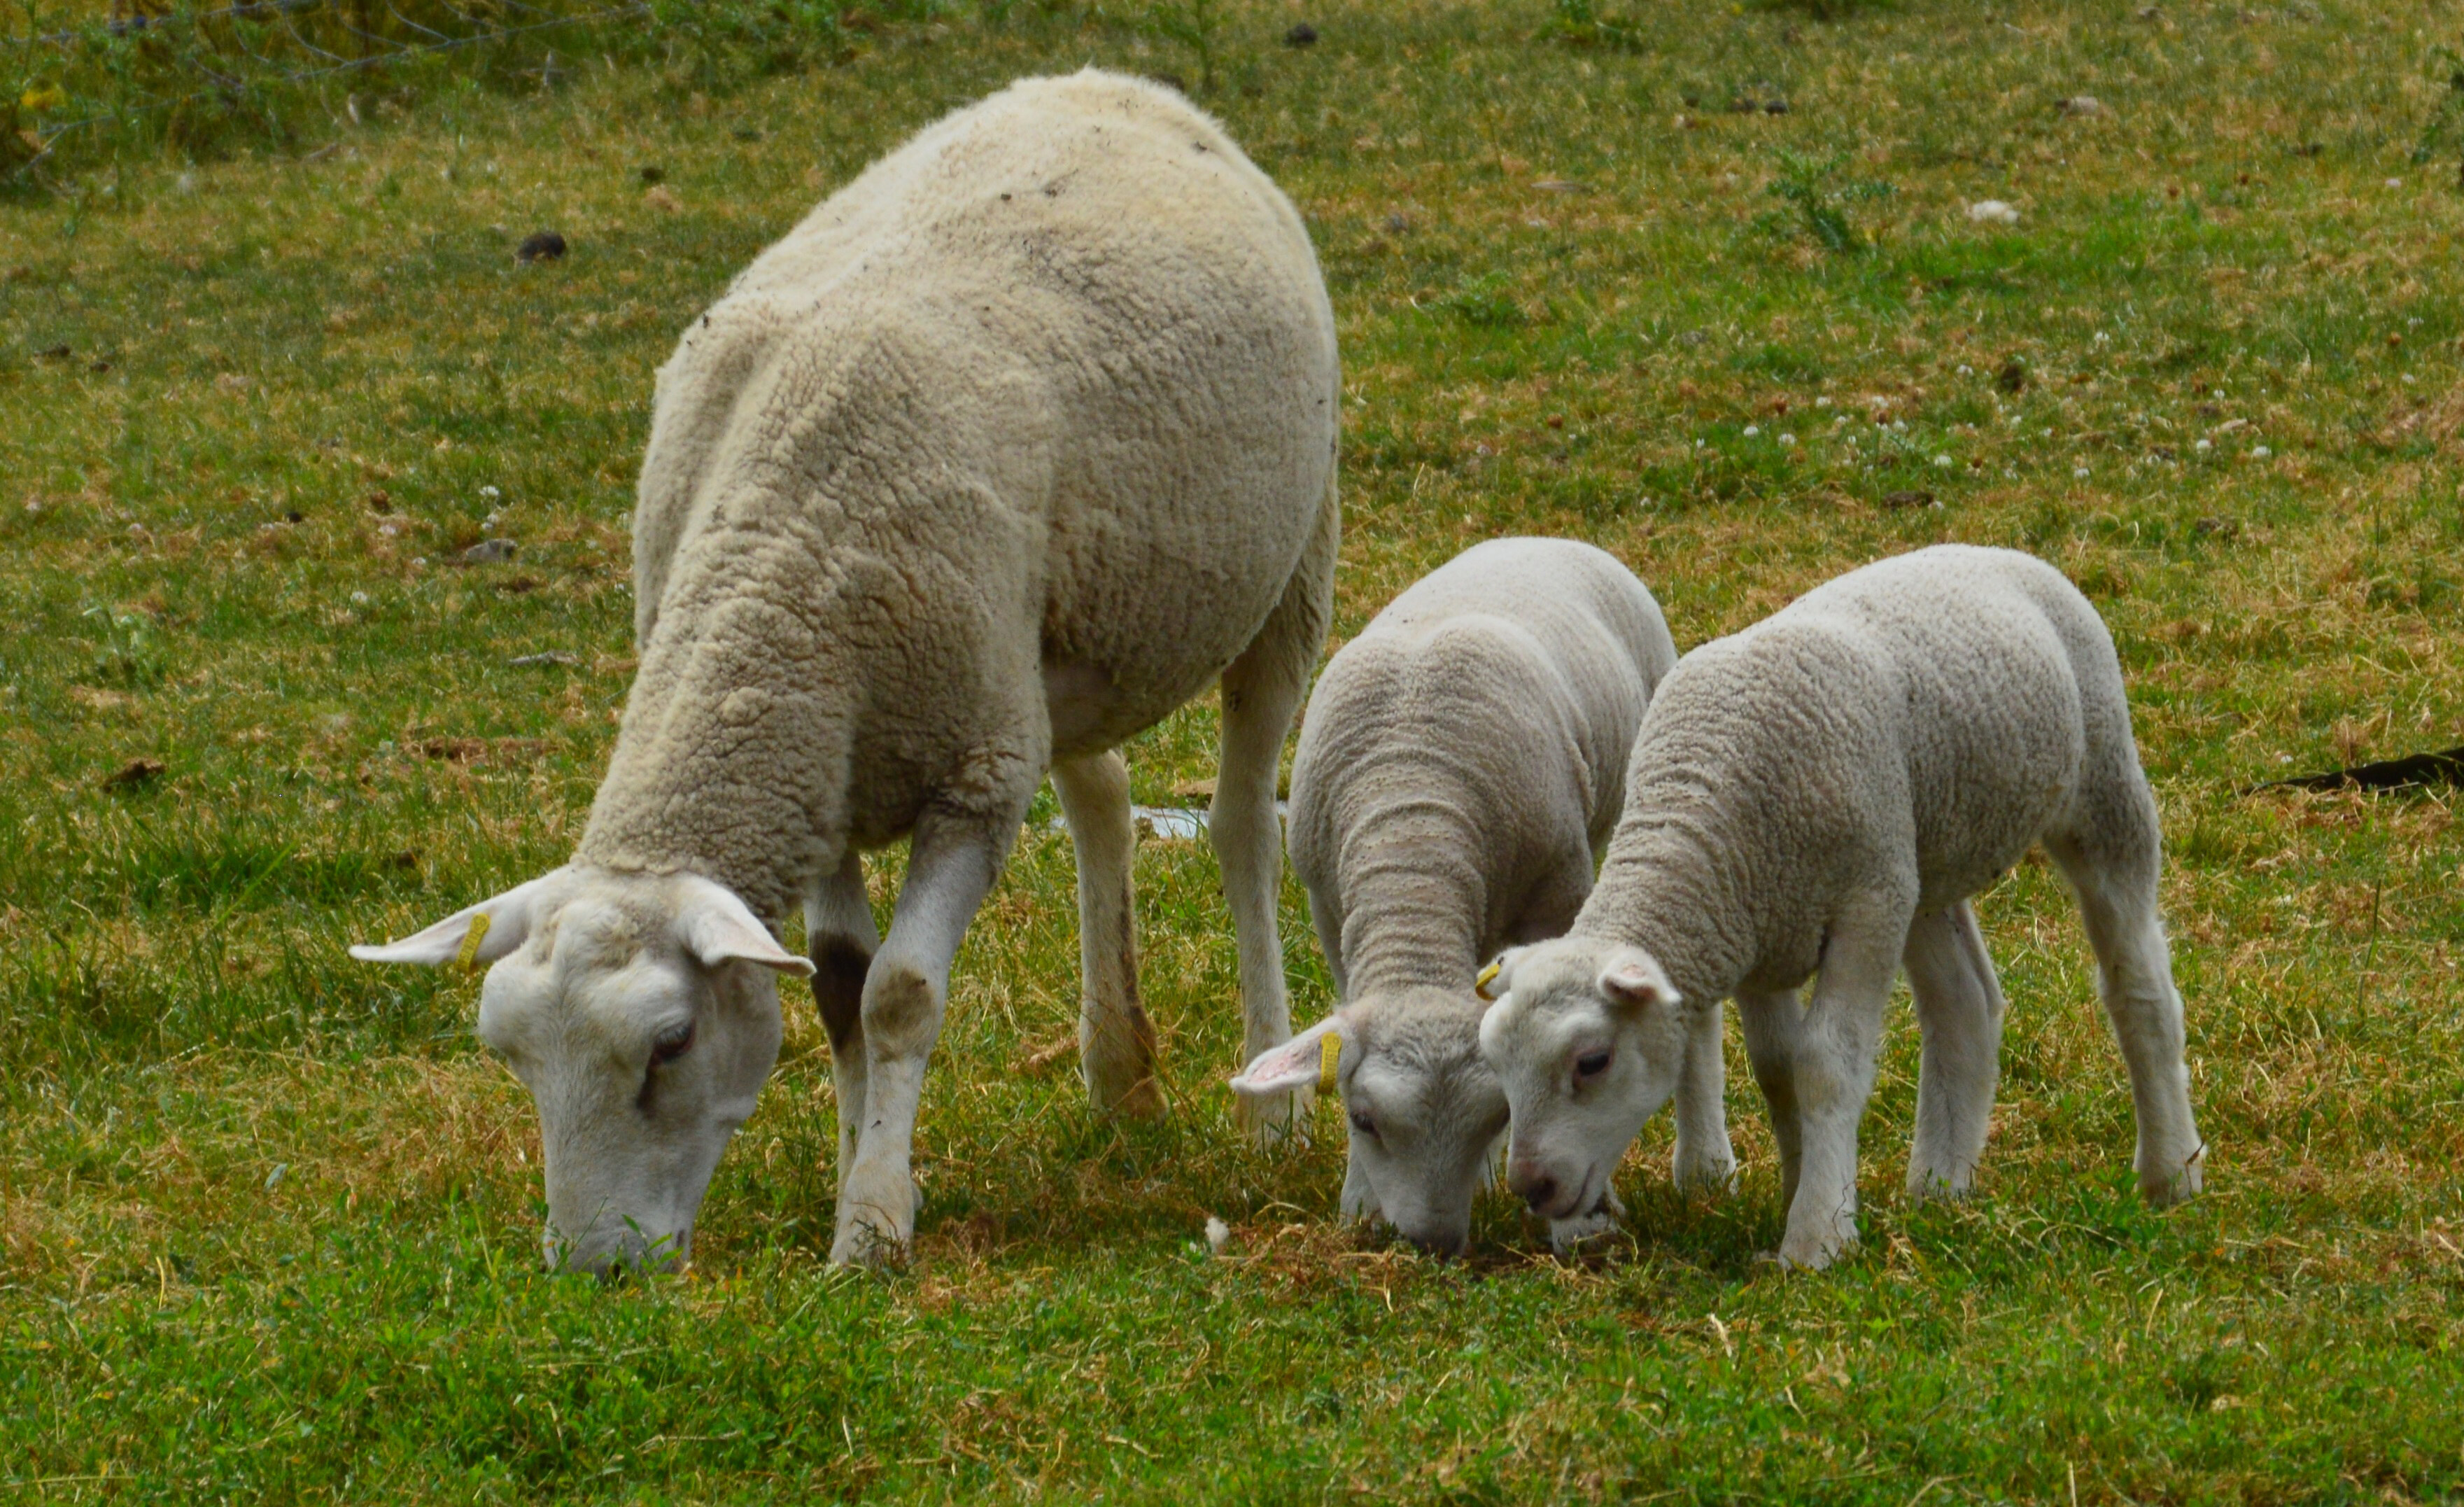 Ewe and two lambs grazing